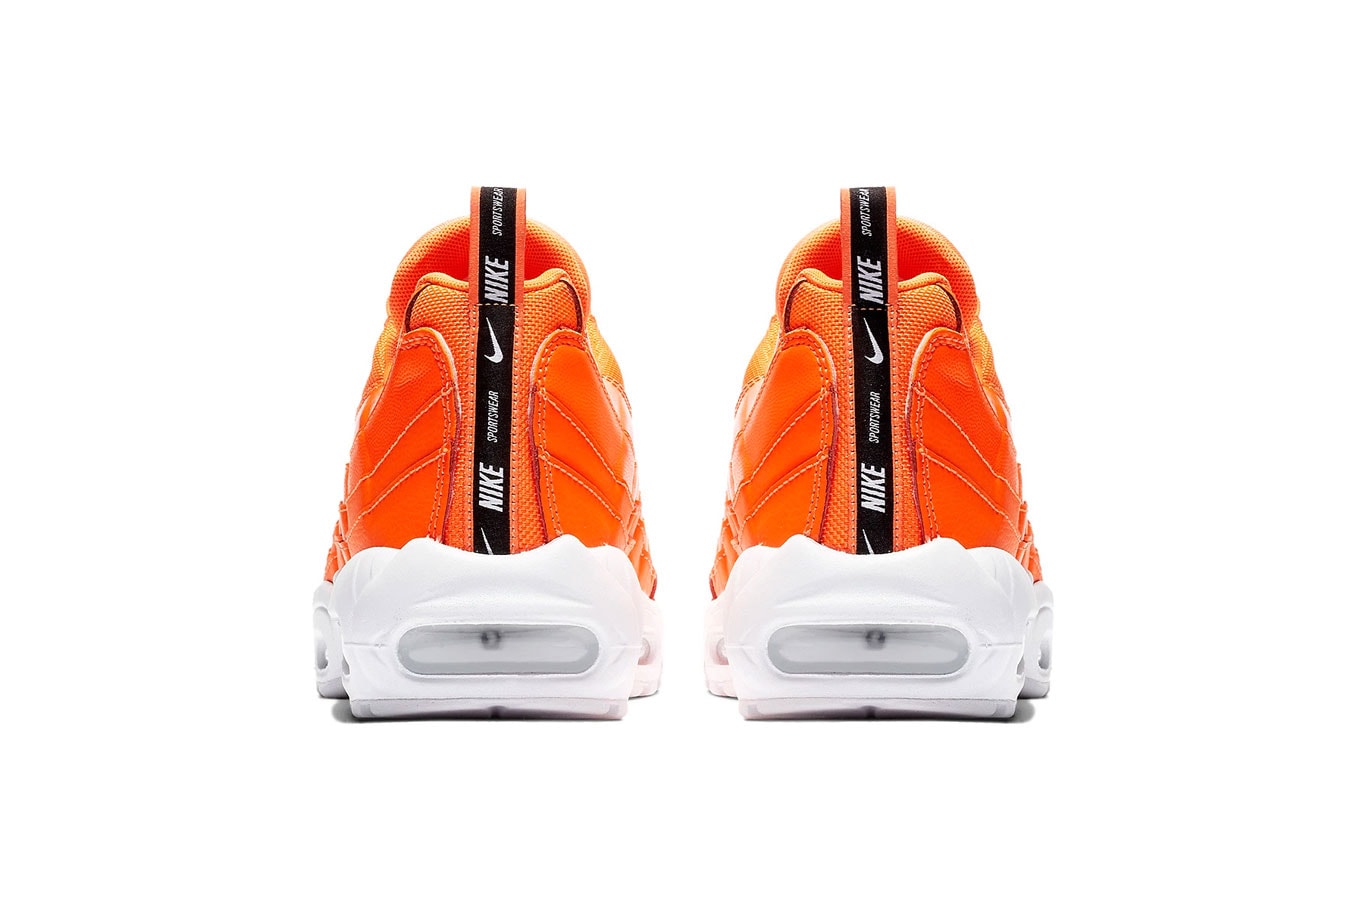 Nike Air Max 95 Premium "Overbranded" Release Date november 2018 price orange white black 